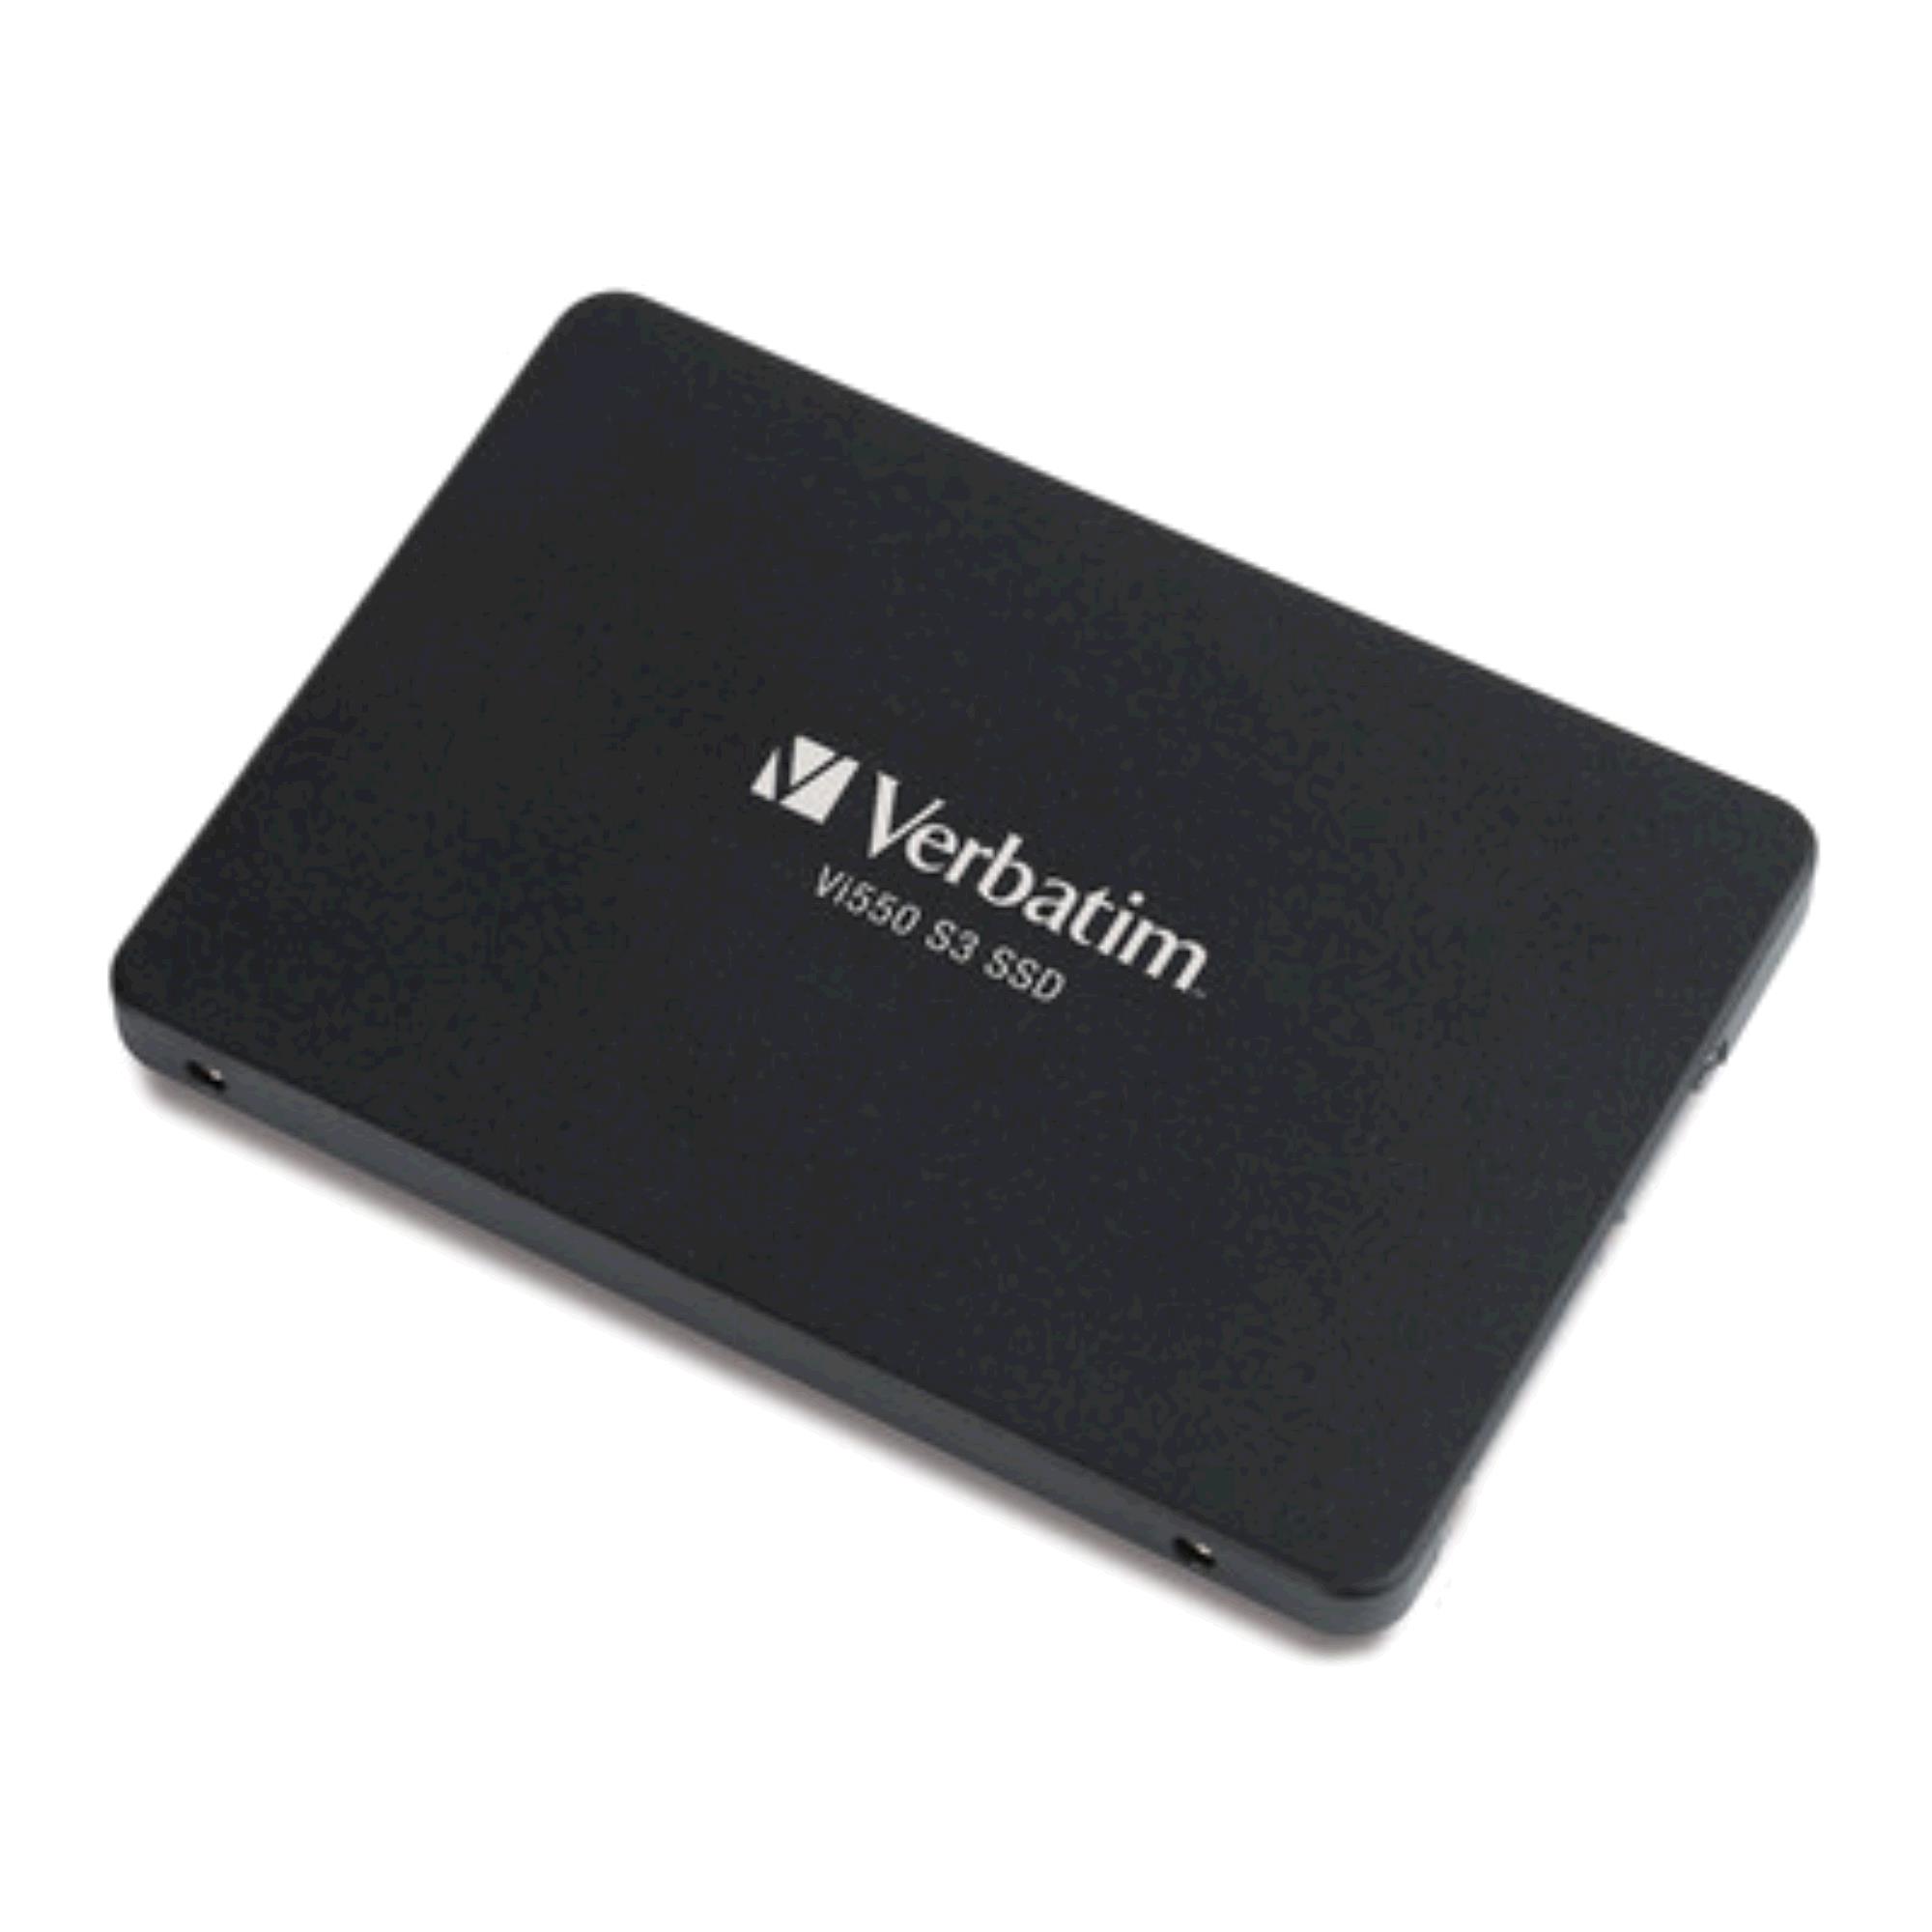 Verbatim SSD Vi550 S3 128GB